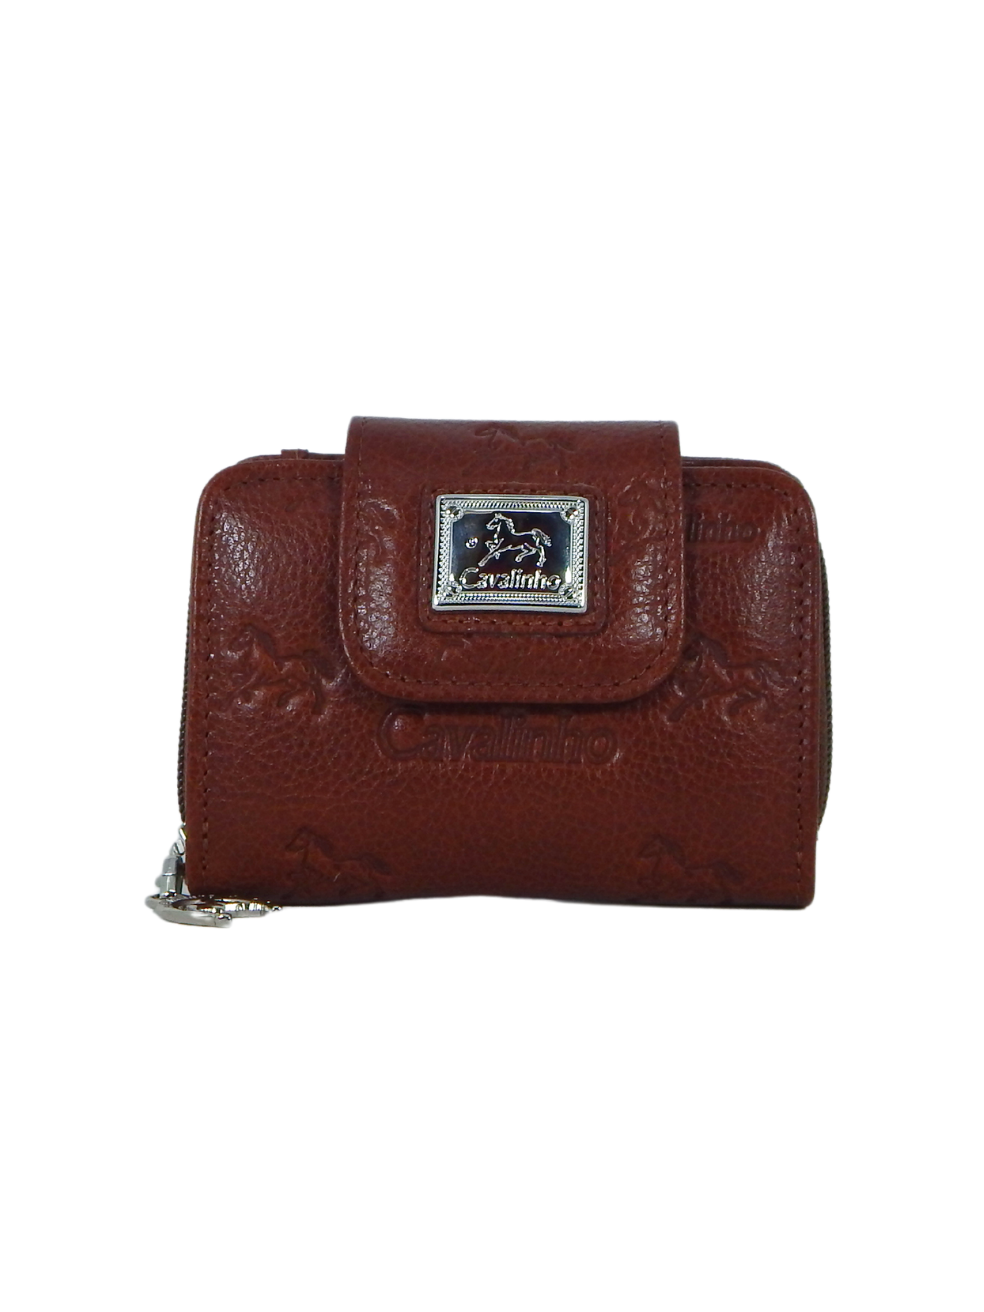 Cavalo Lusitano Leather Wallet SKU 28090218.13 #color_sadddlebrown